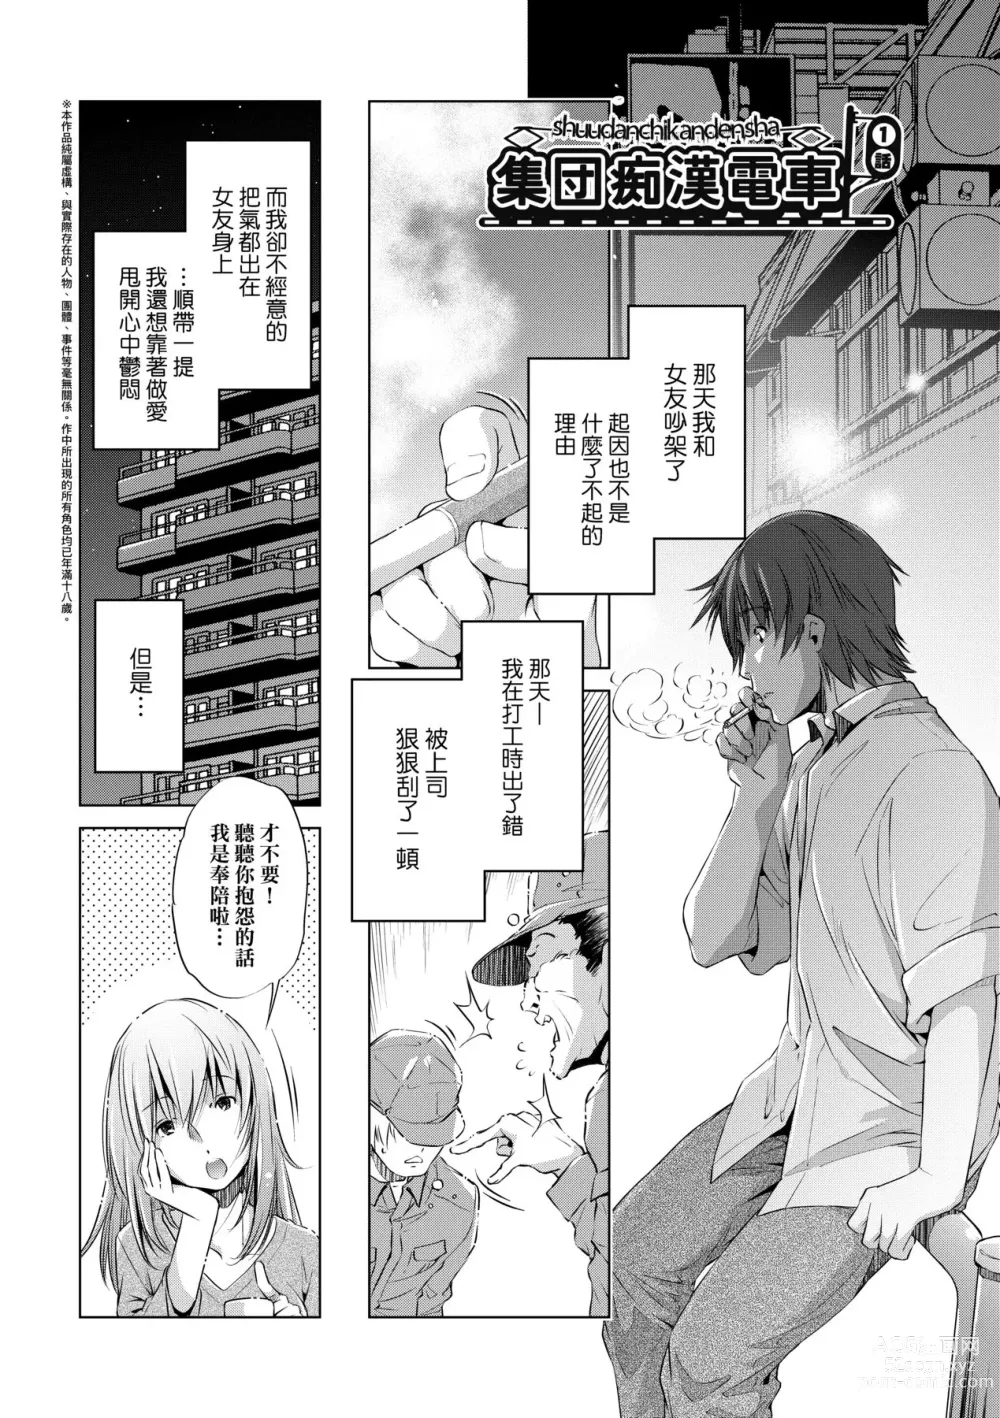 Page 8 of manga Shuudan Chikan Densha (decensored)